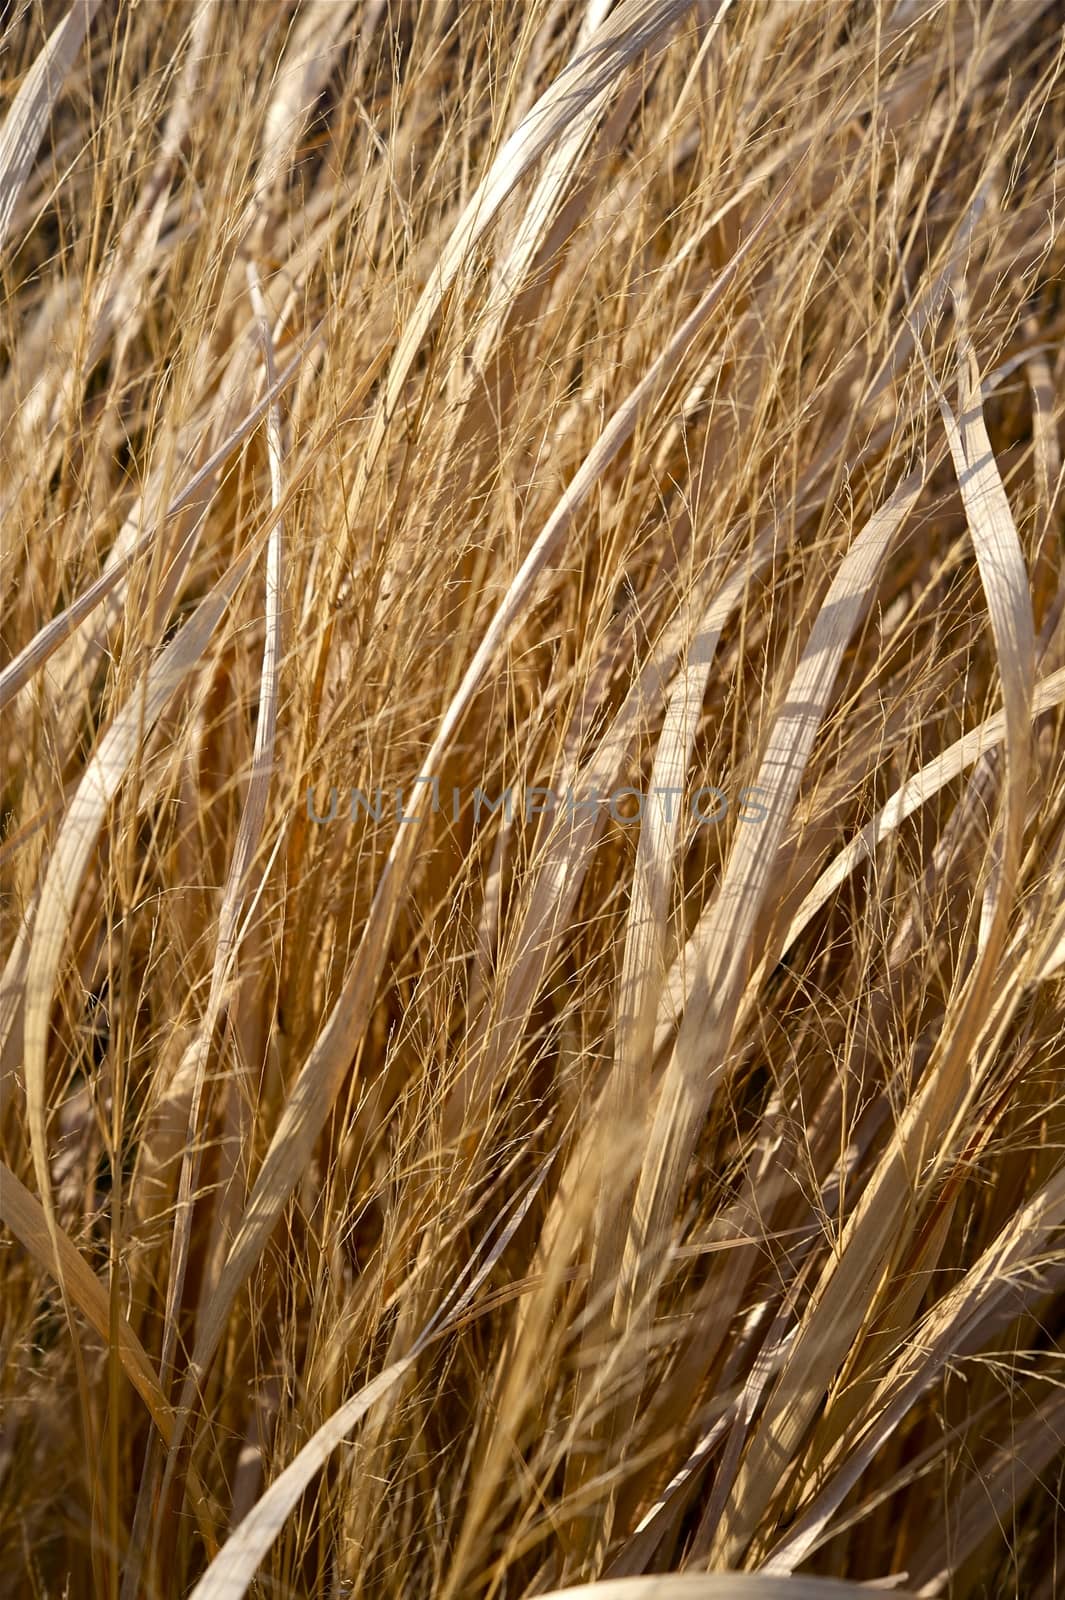 Dry Grasses - Dry Grassy Plants Vertical Photo Background.